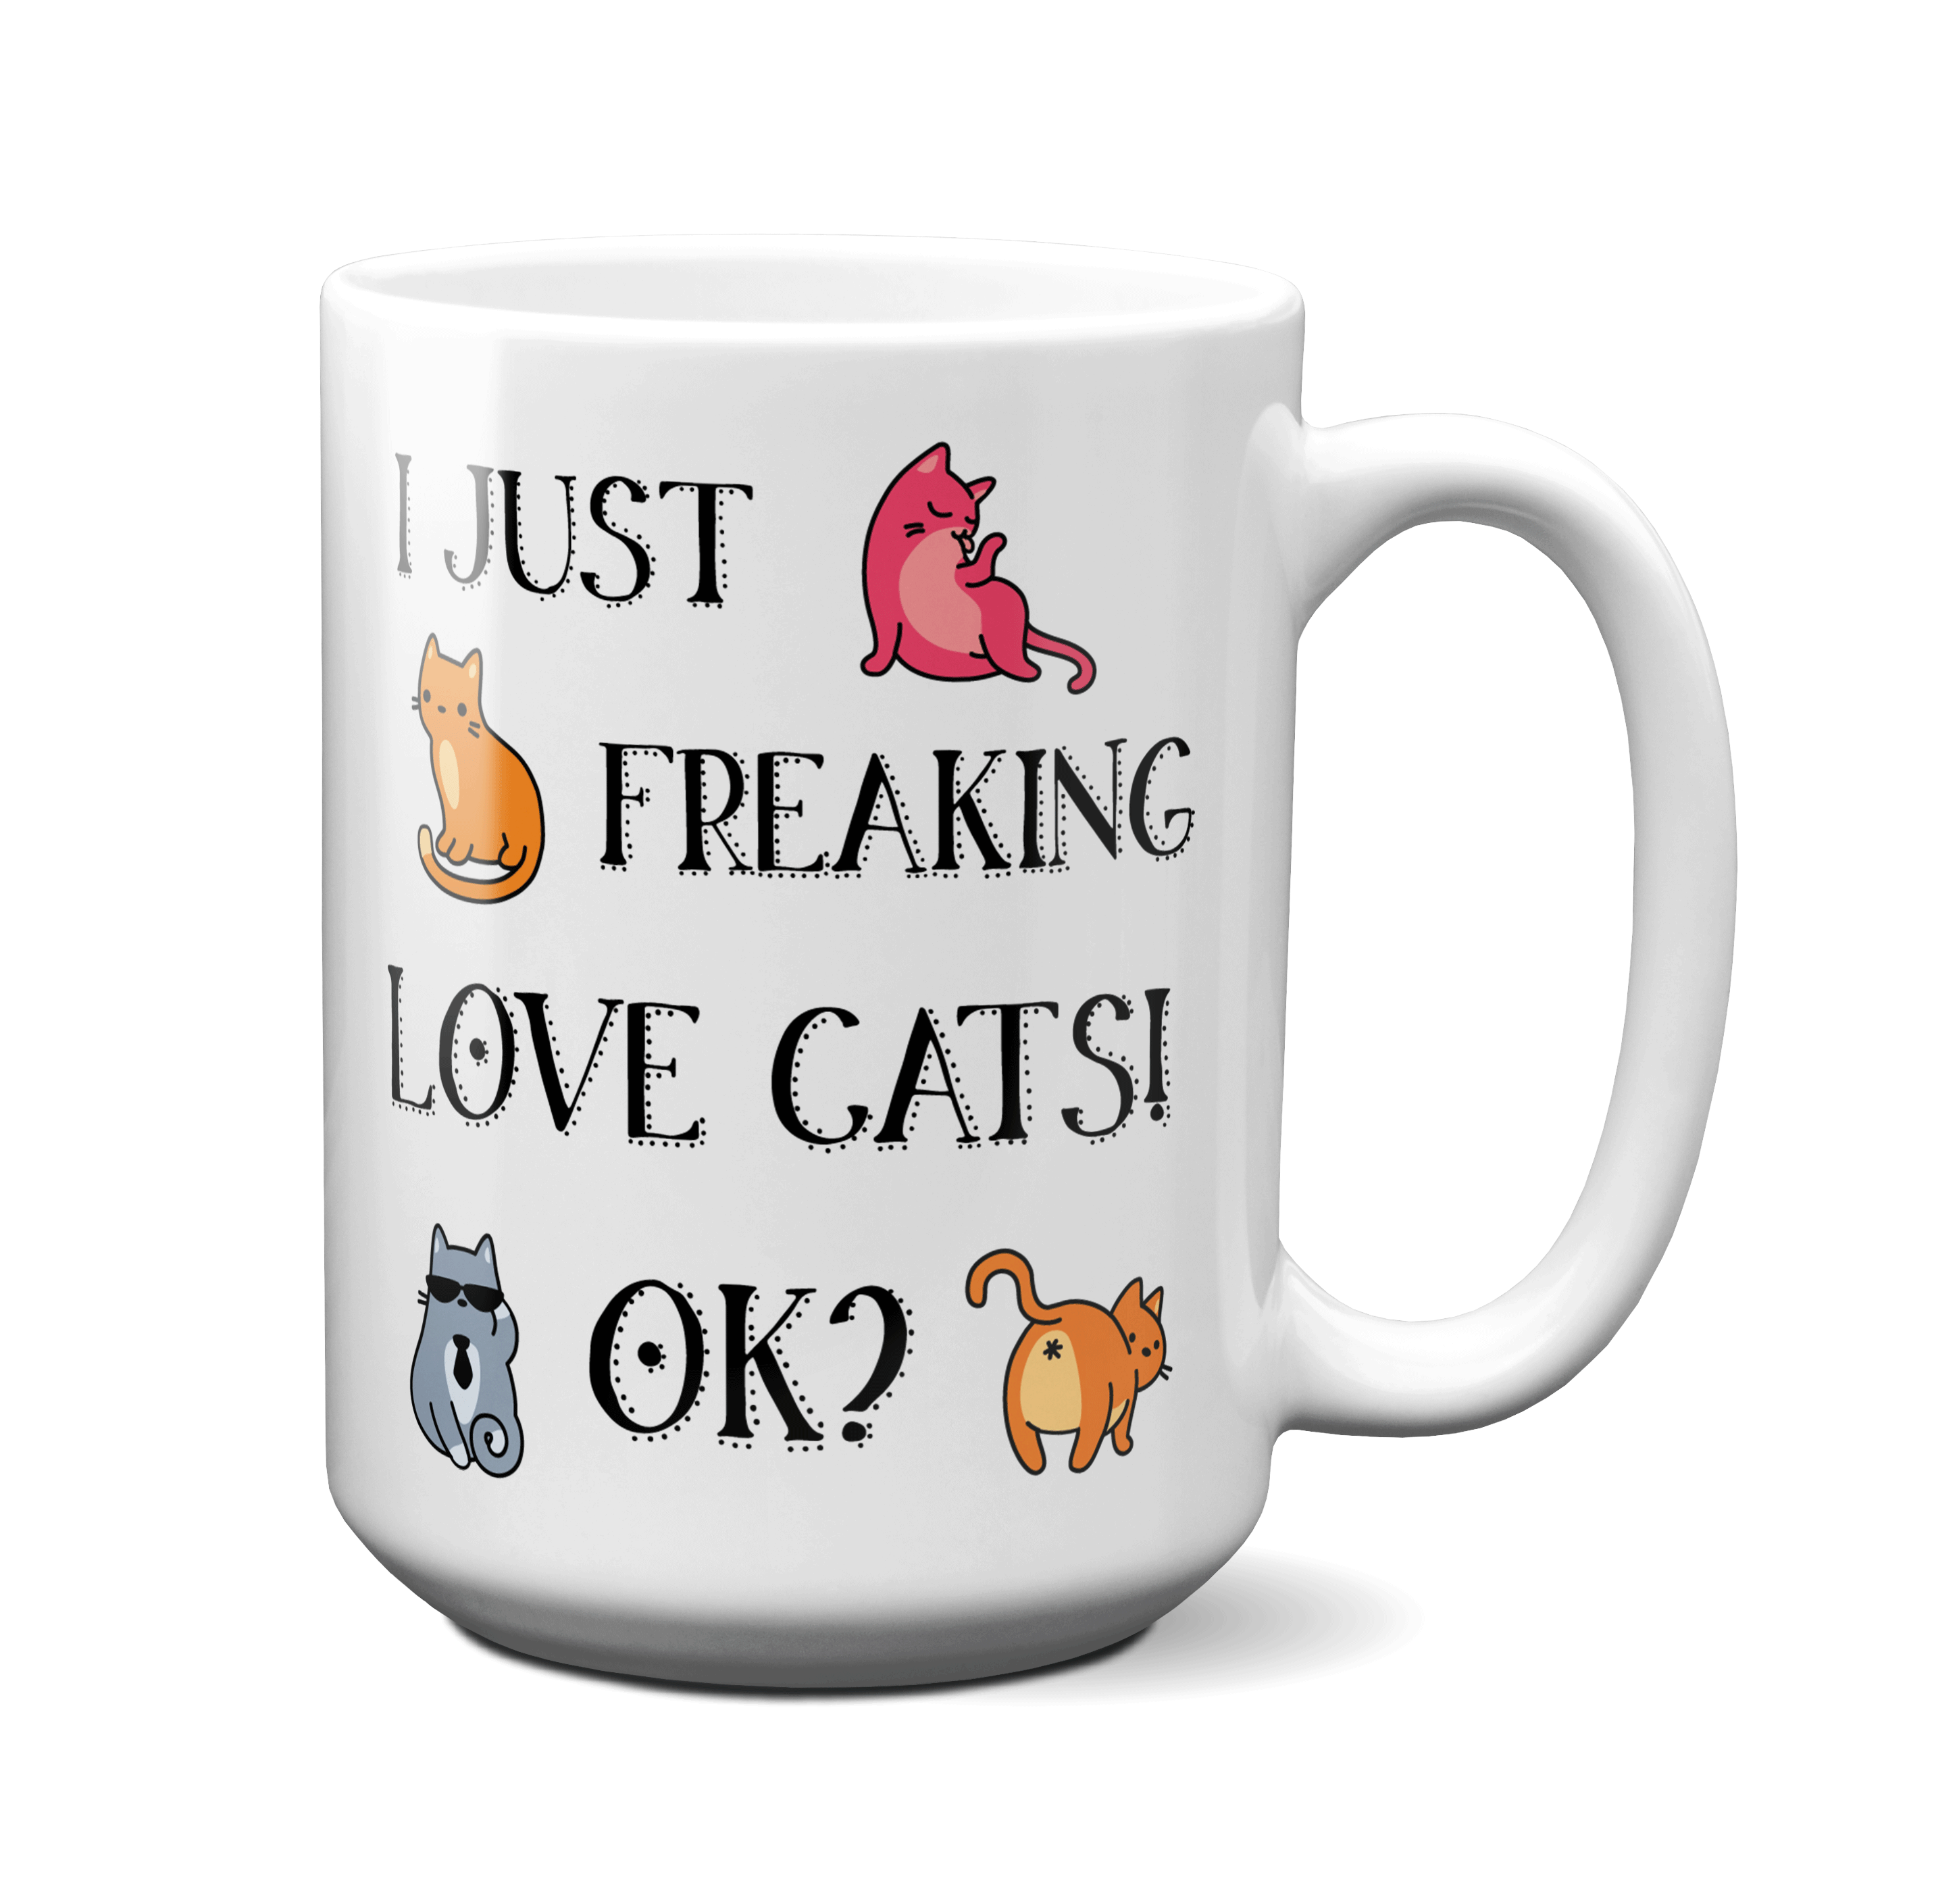 Boom 🐥 a- 💥 #cats #cat #love #catsofinstagram #coffee #iloafyou